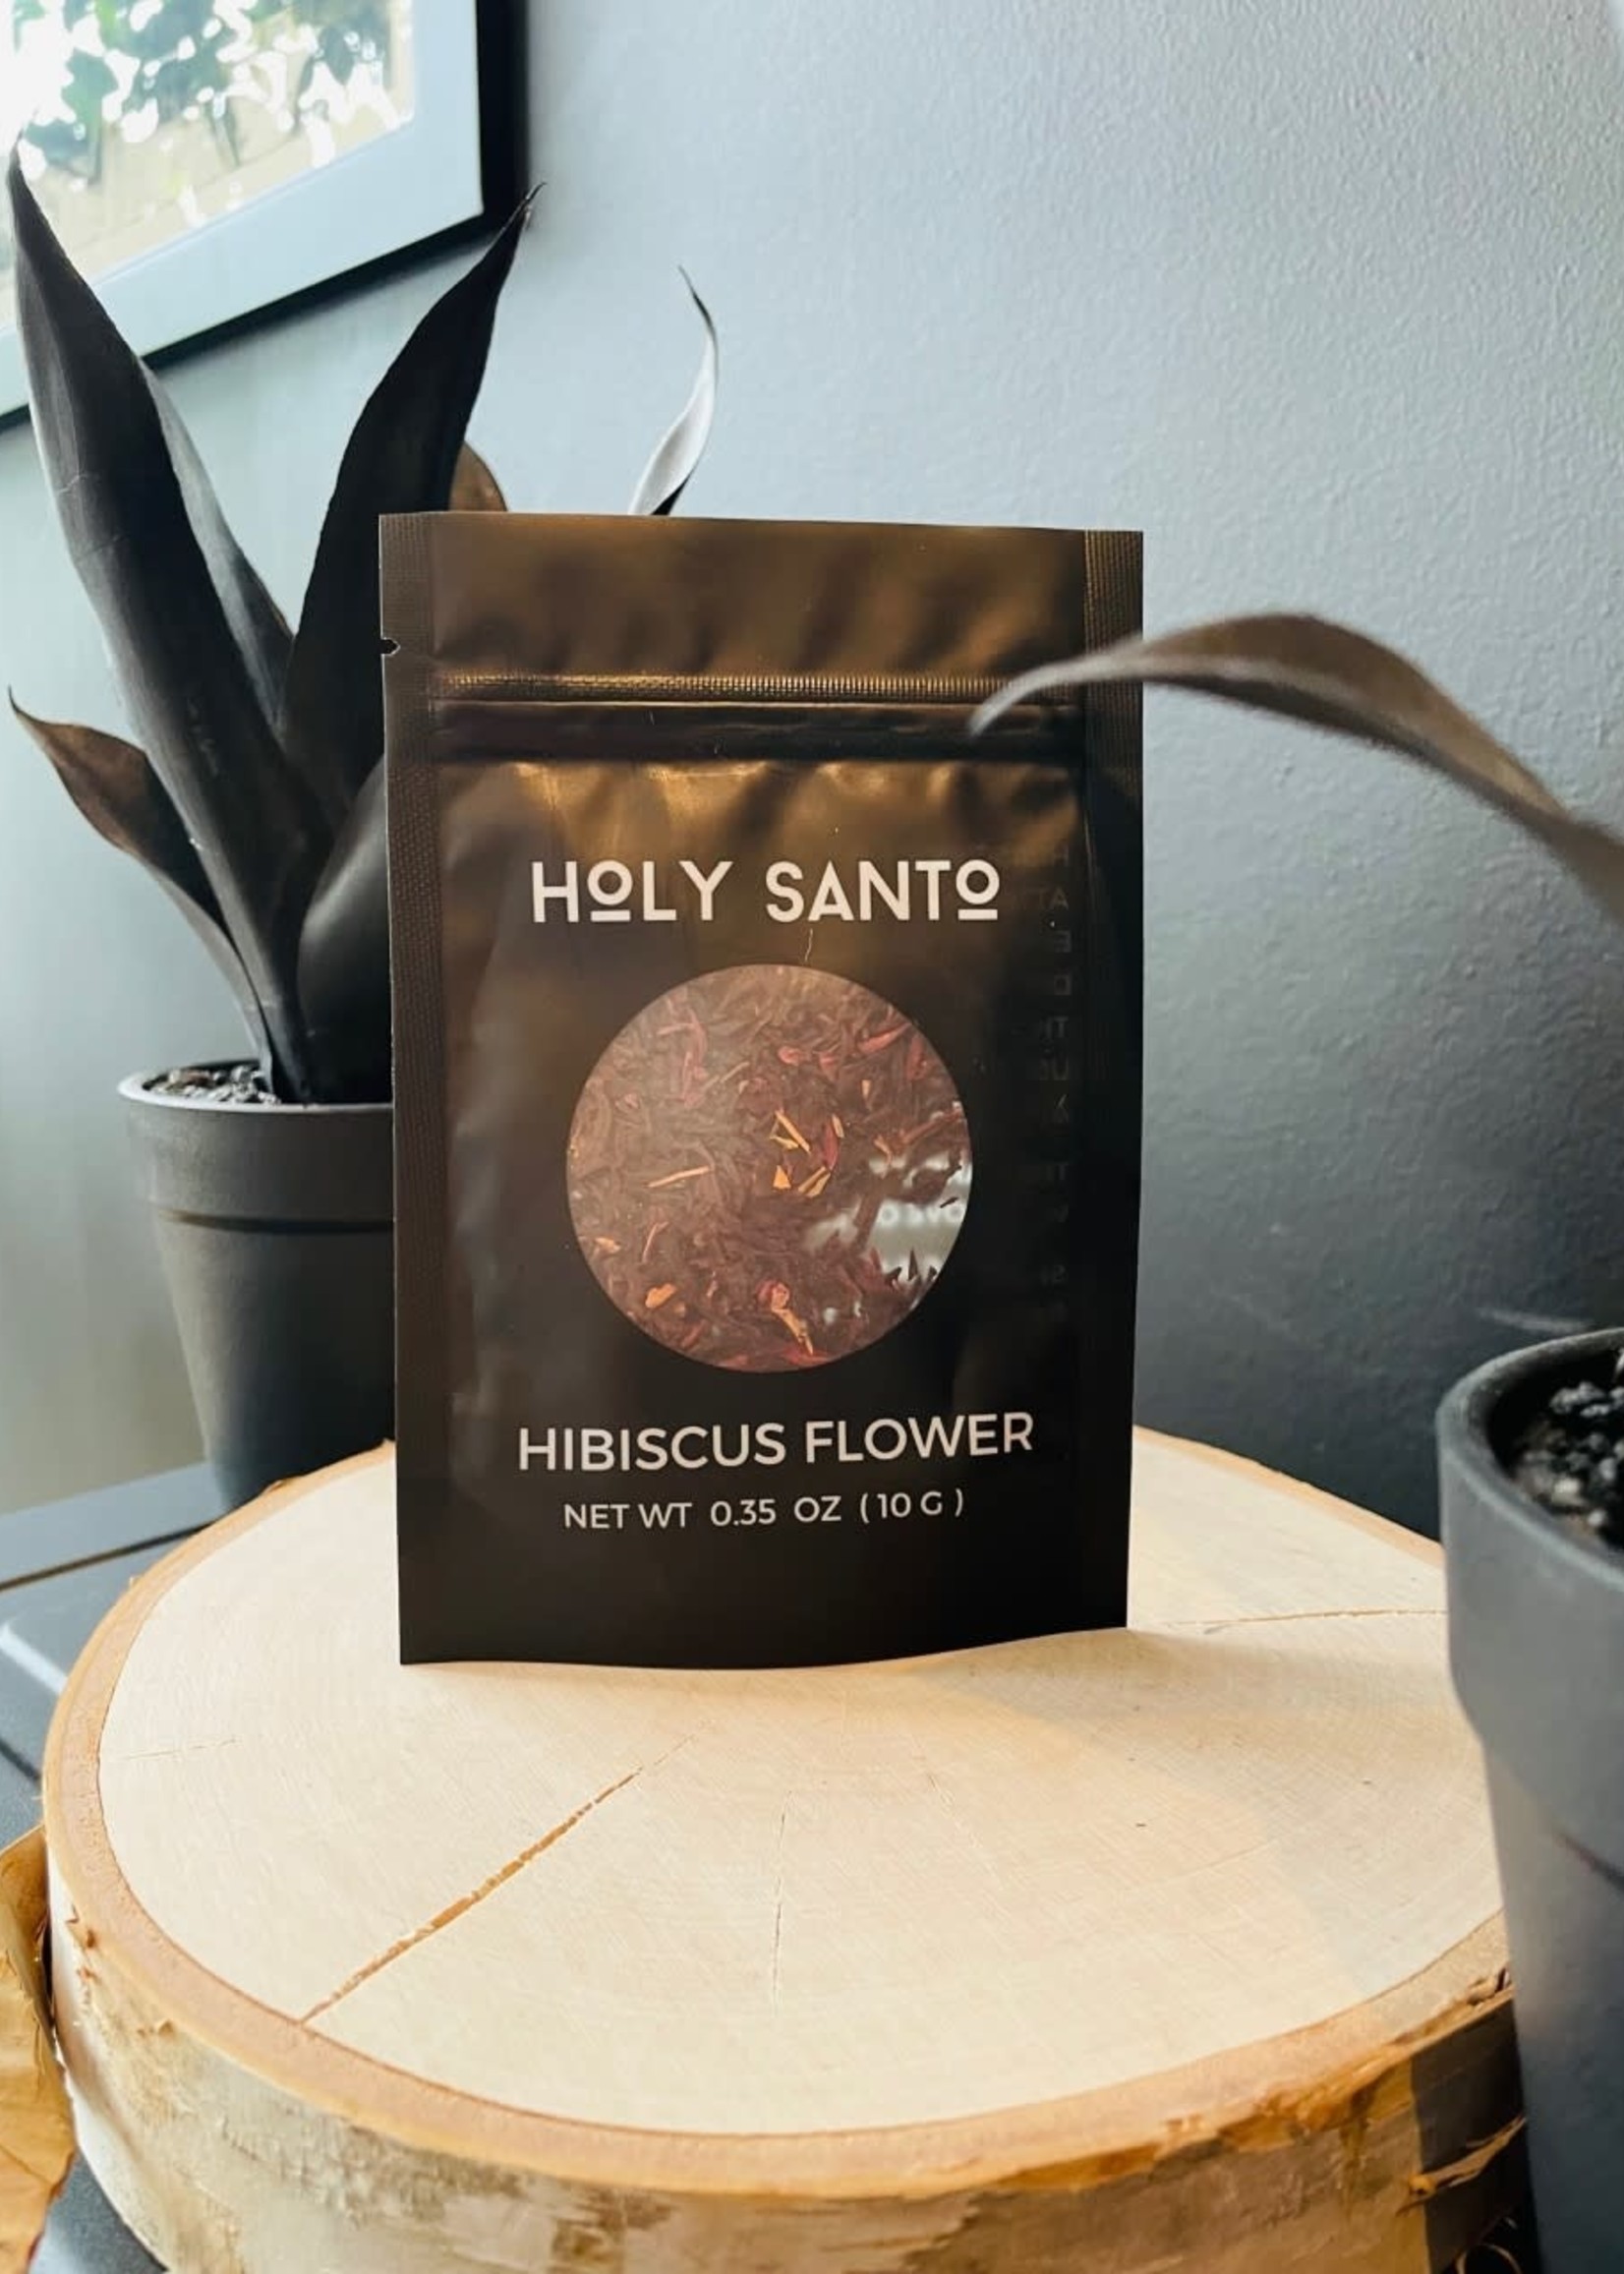 Holy Santo Hibiscus Flower Ritual Herb